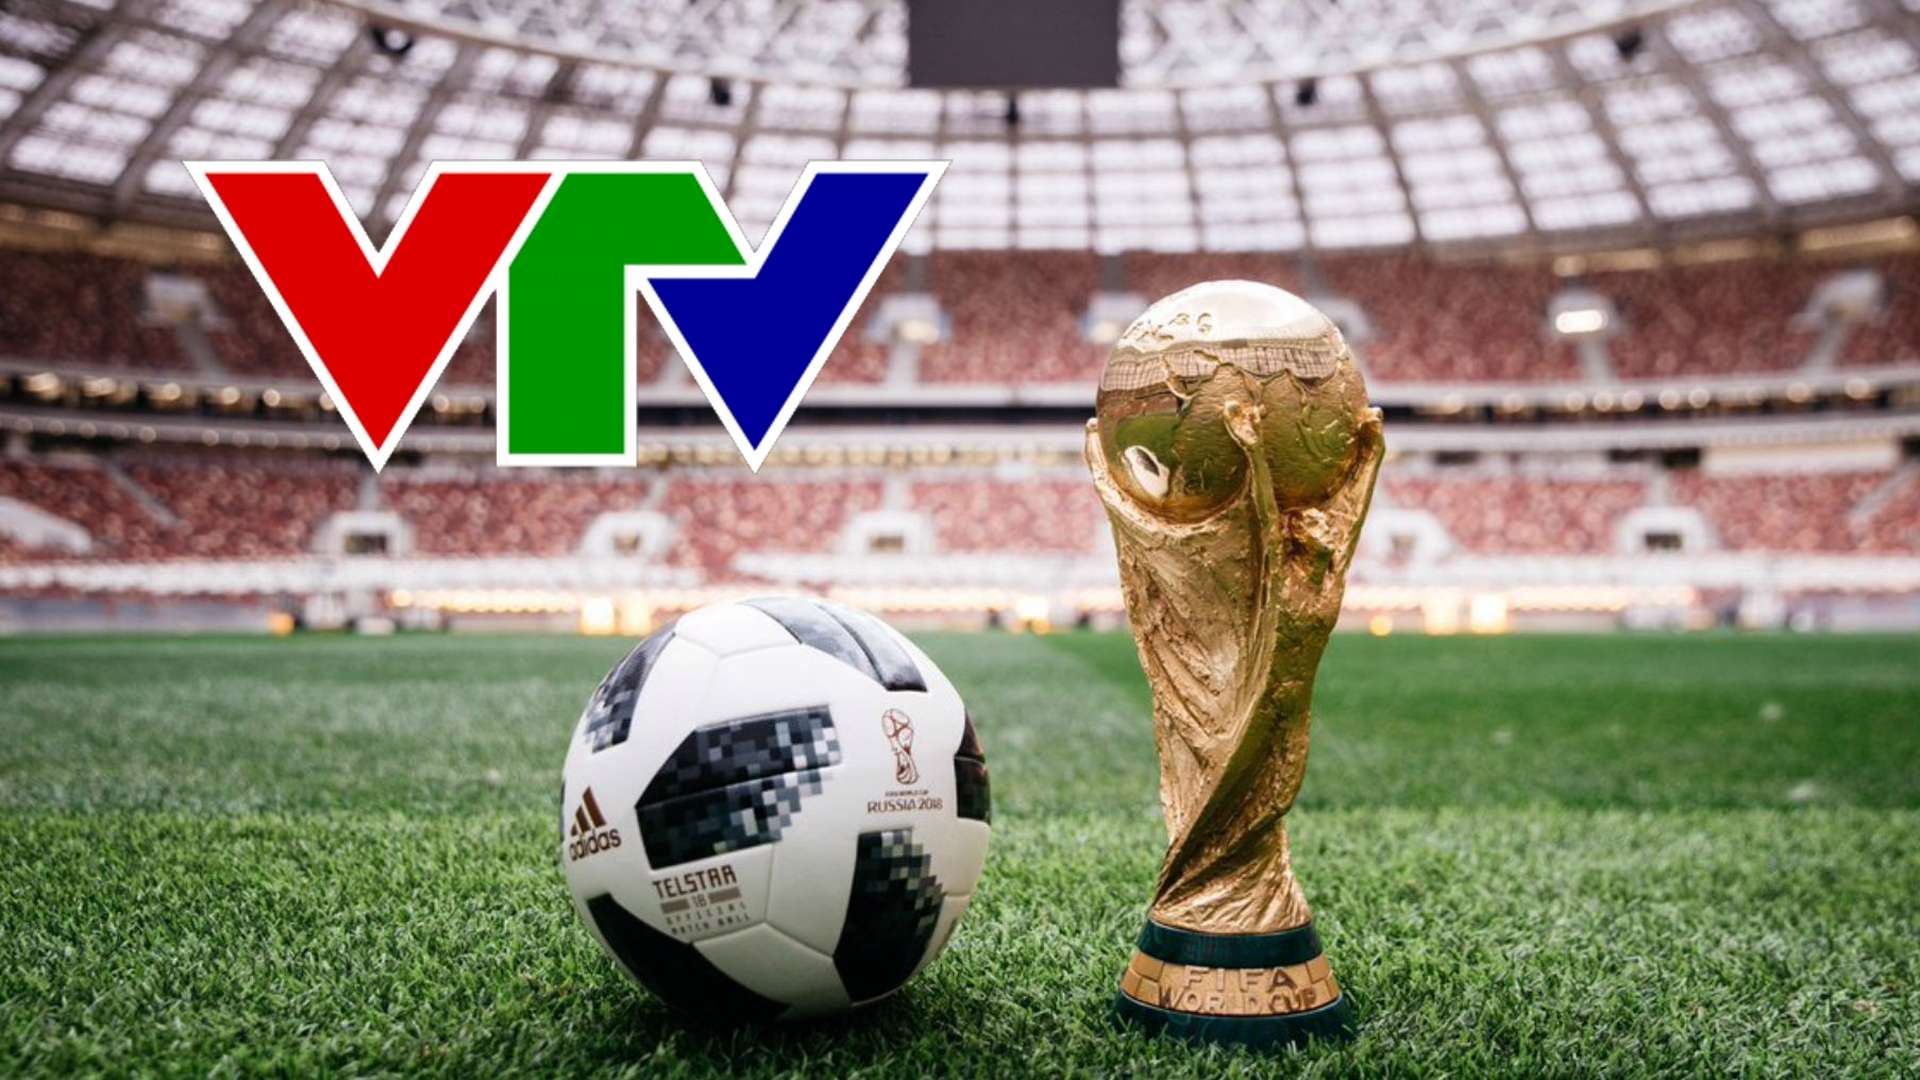 VTV World Cup 2018